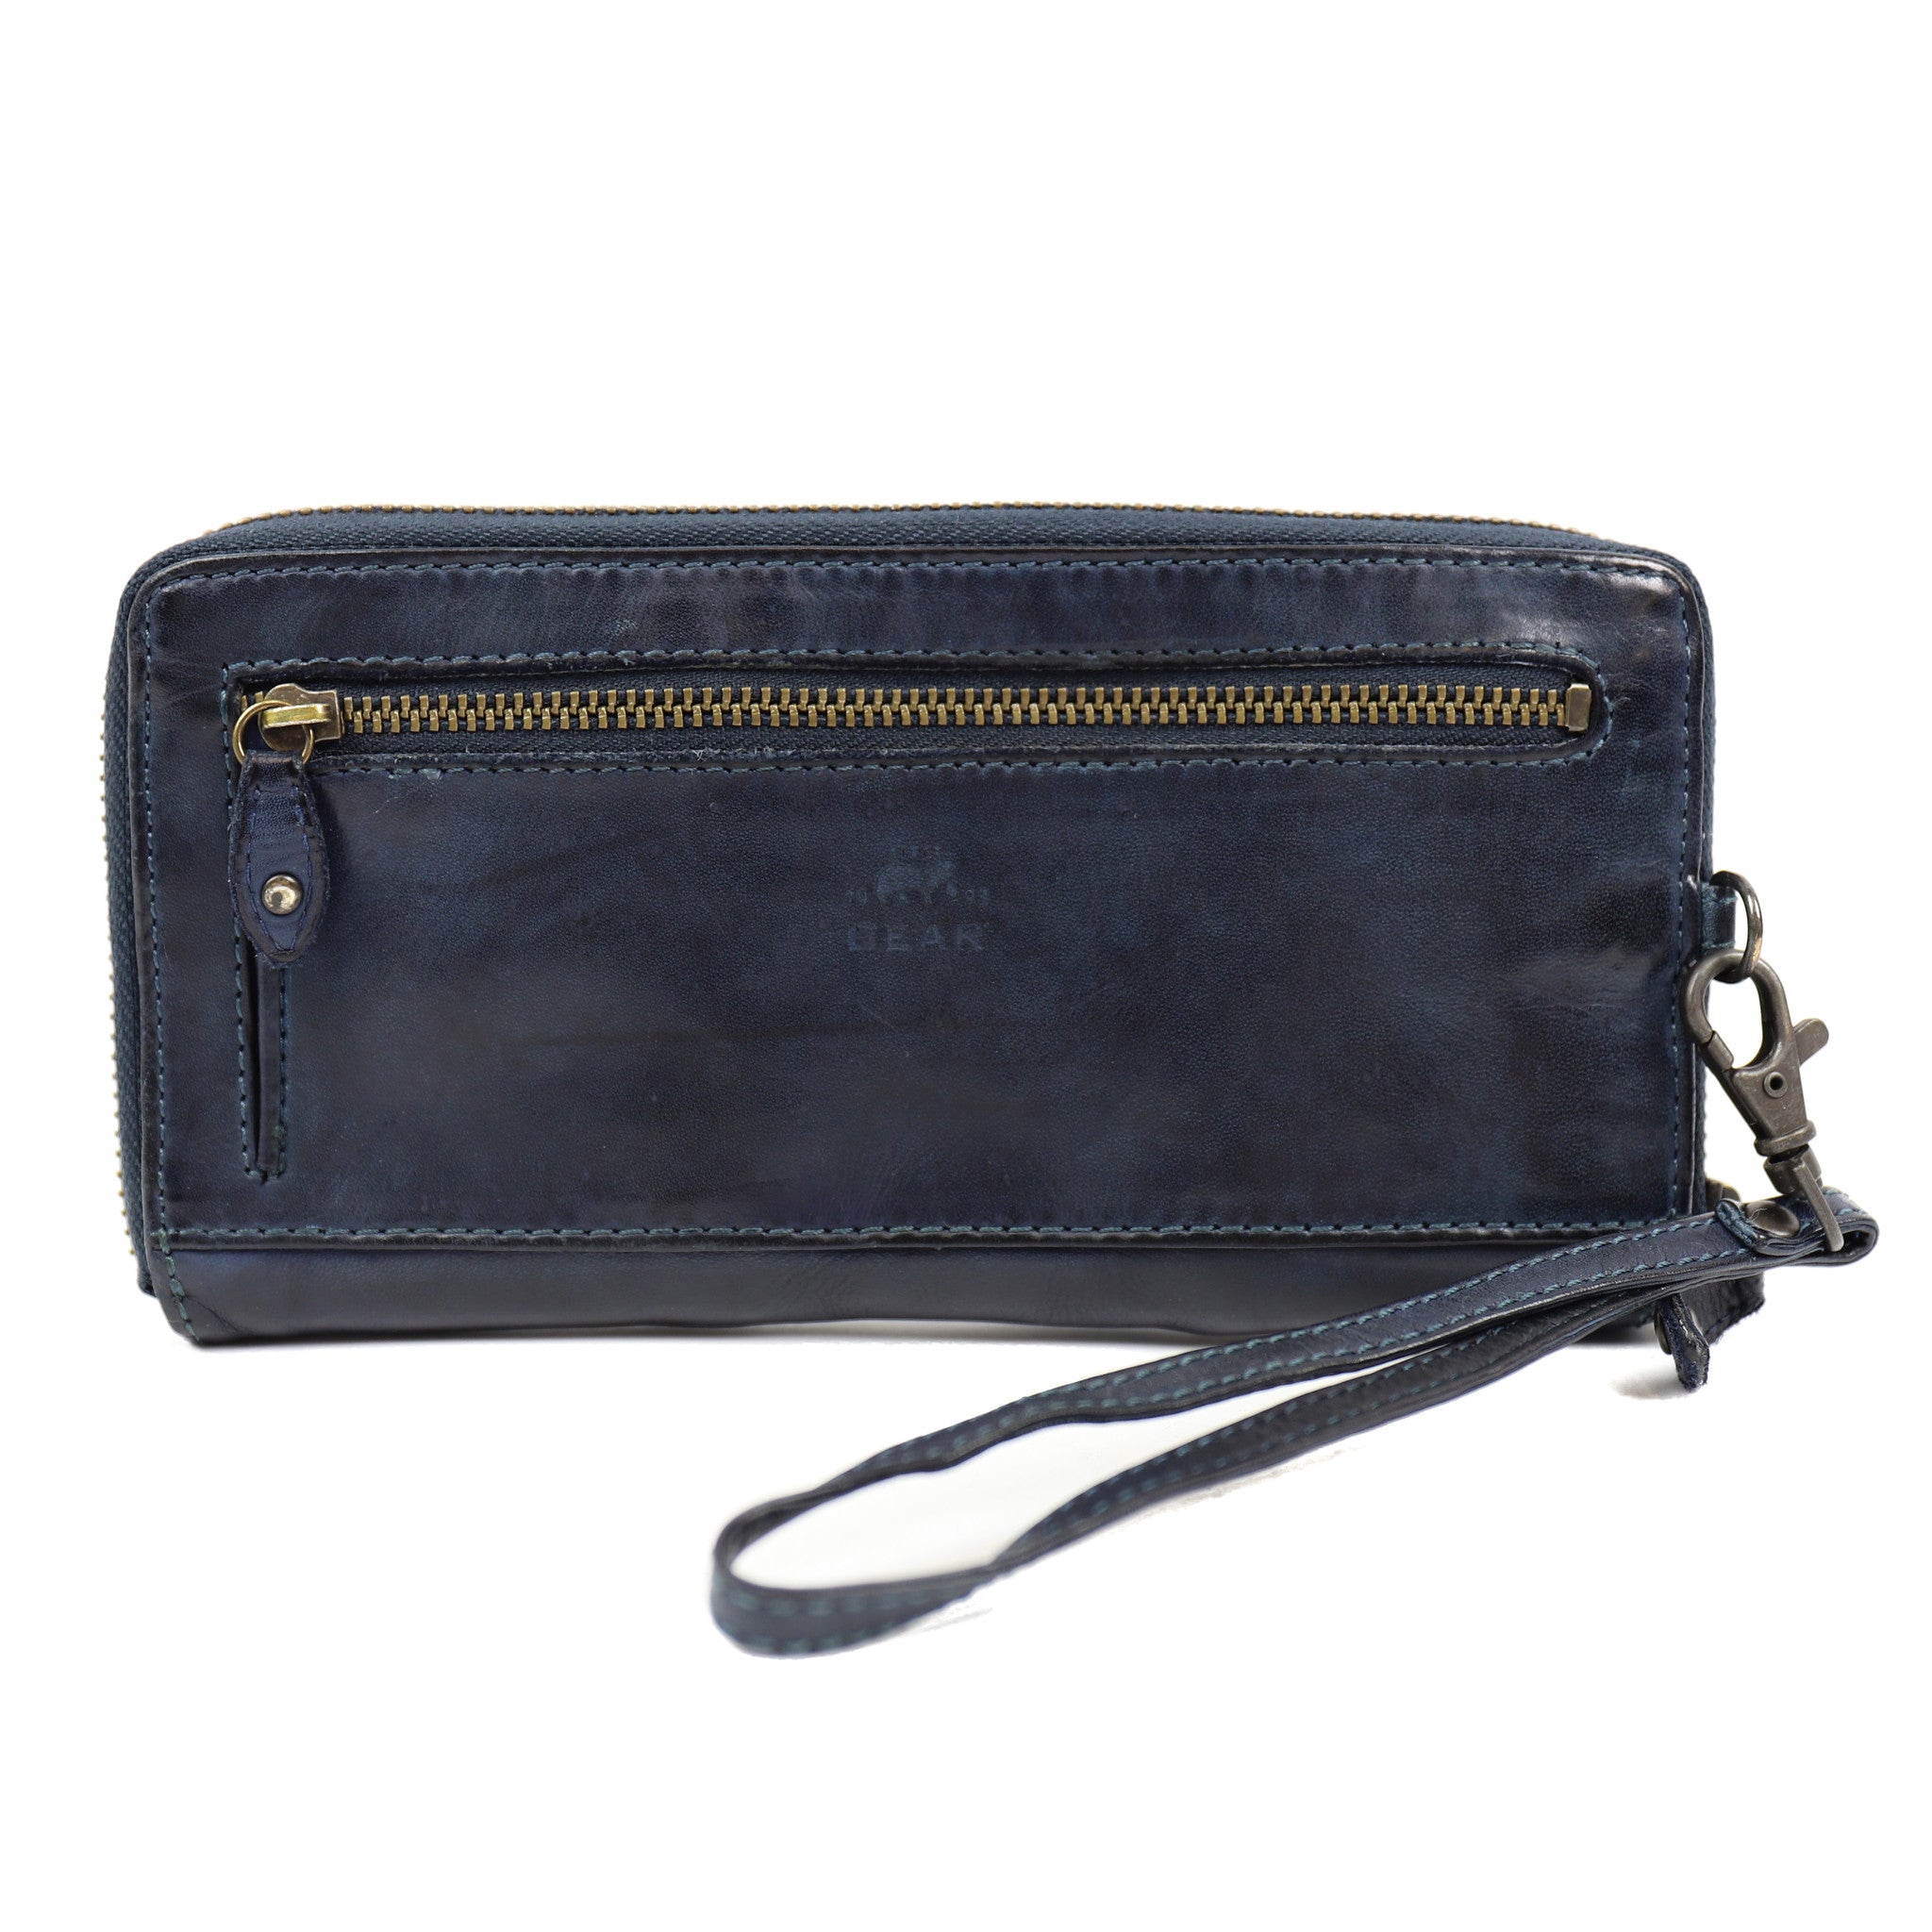 Zipper wallet 'Sofie' dark blue - CL 15882